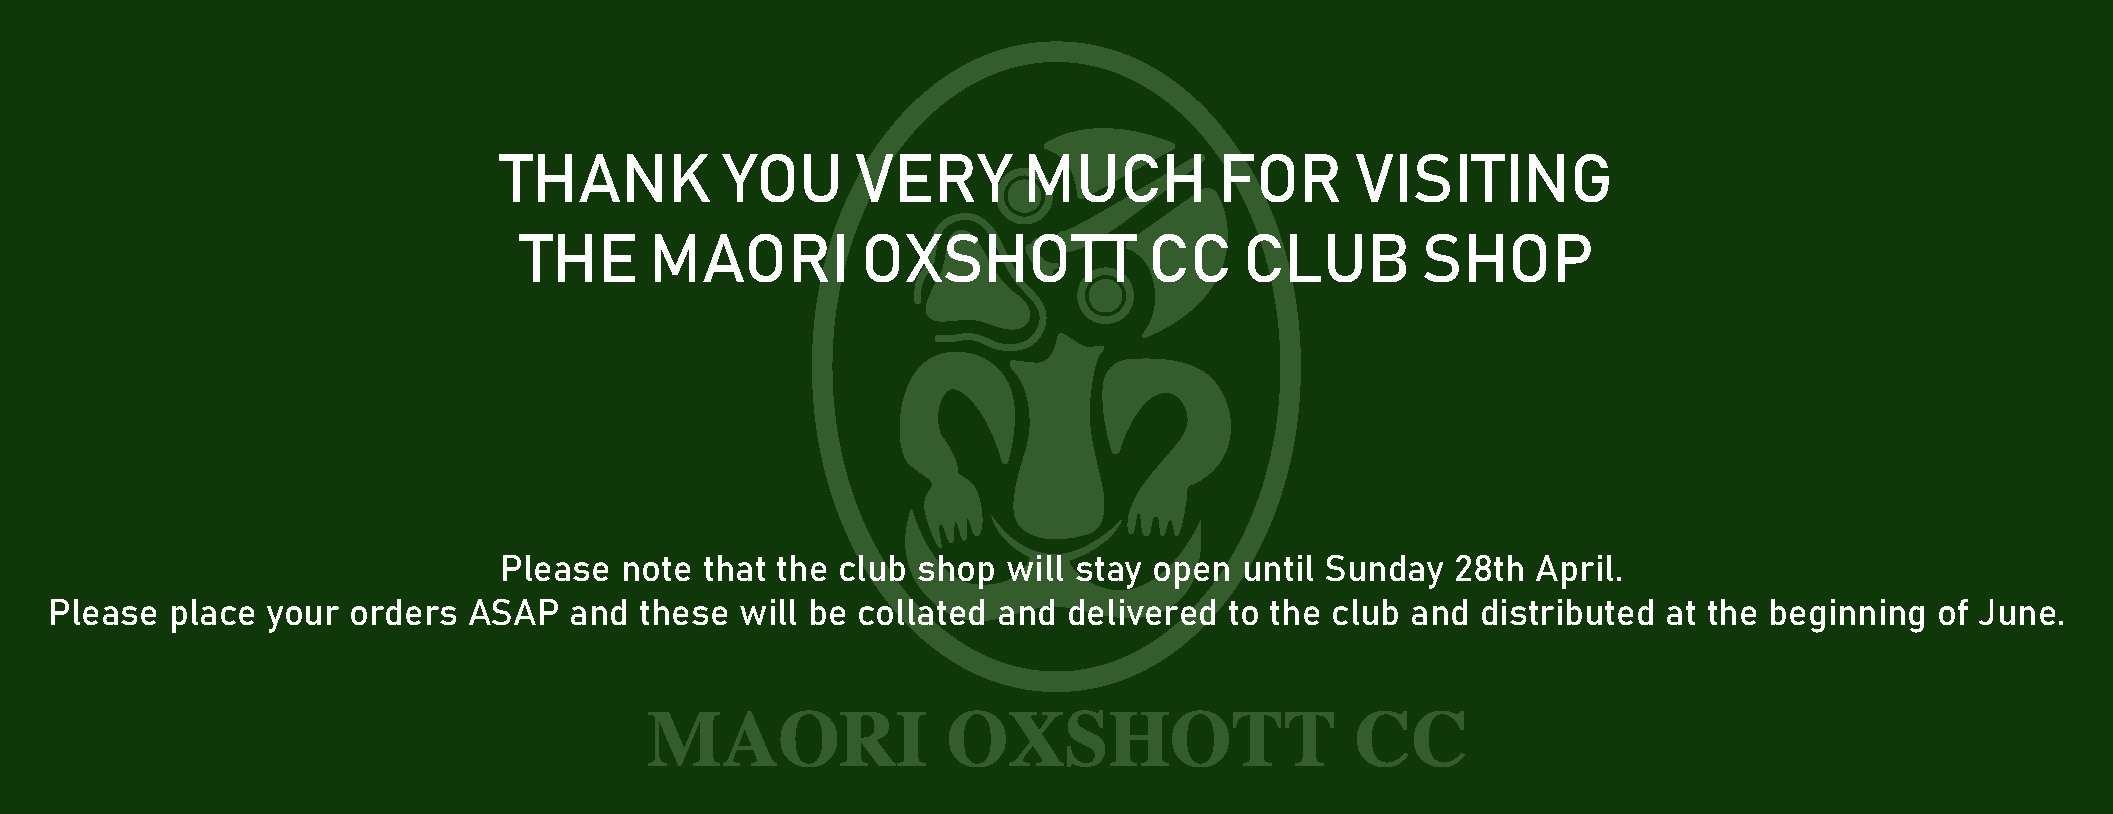 Maori Oxshott CC - Junior Club Shop